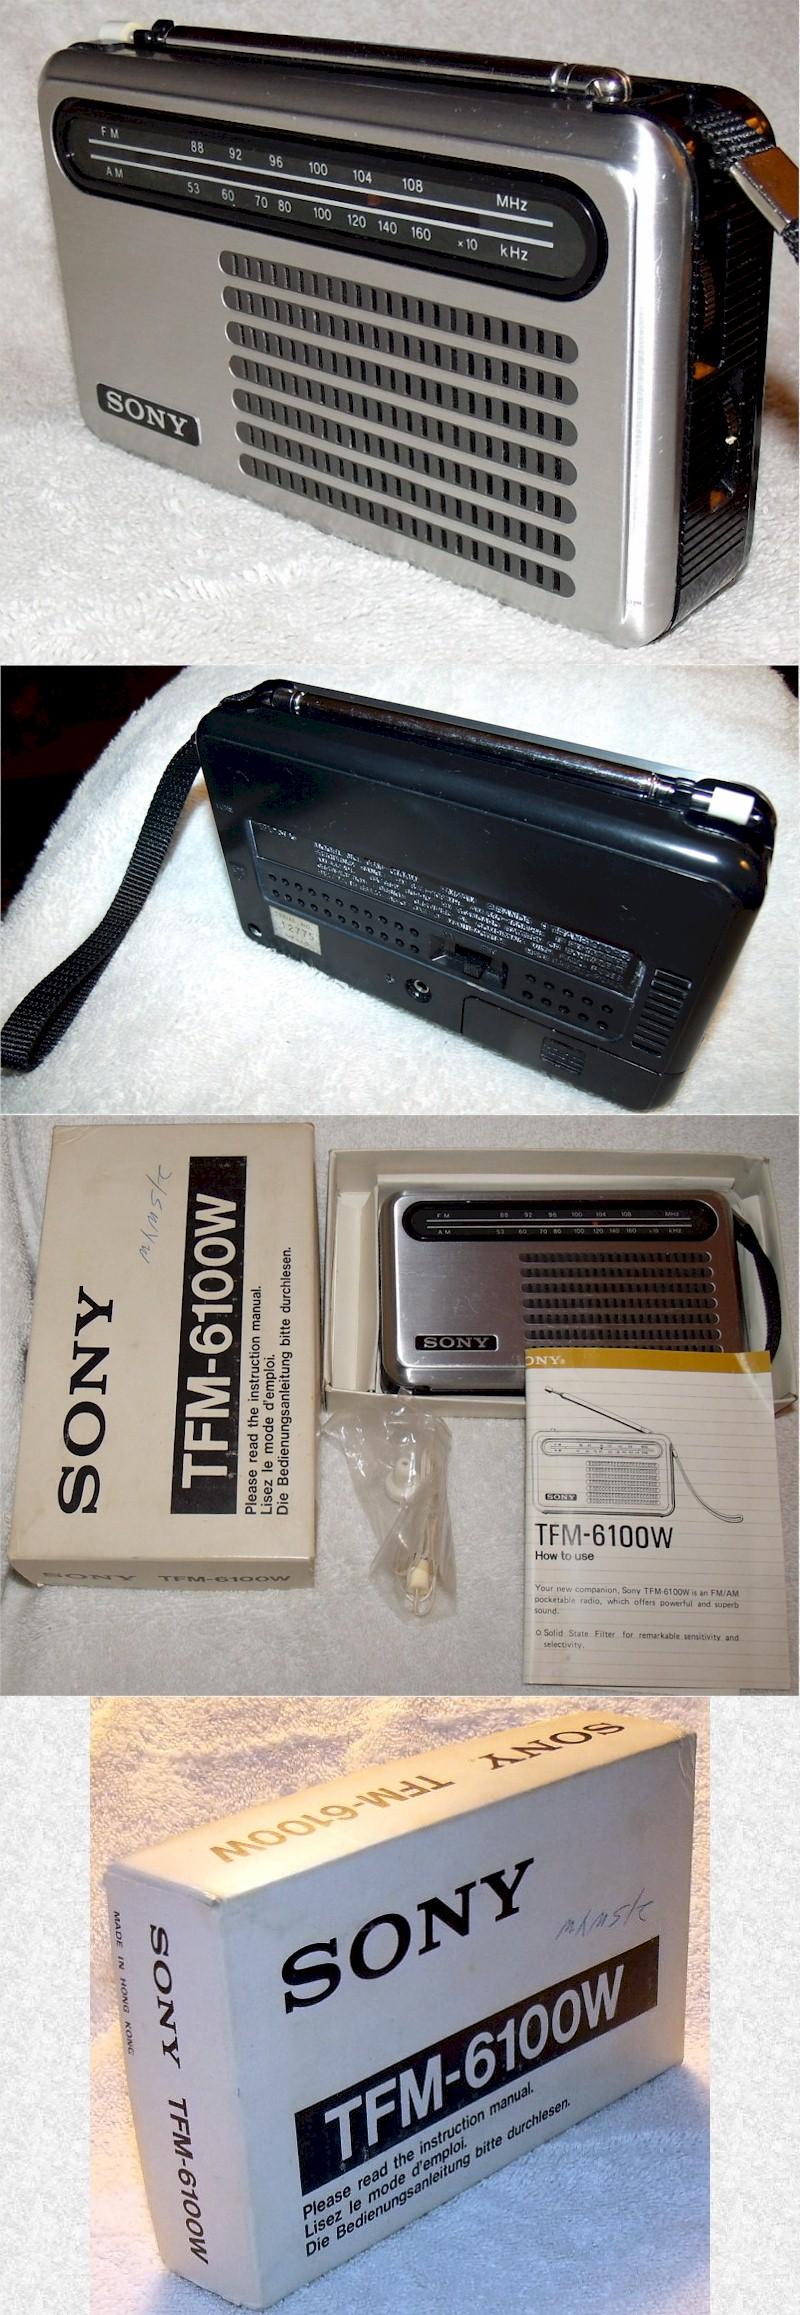 Sony TFM-6100W Portable Transistor (1976)